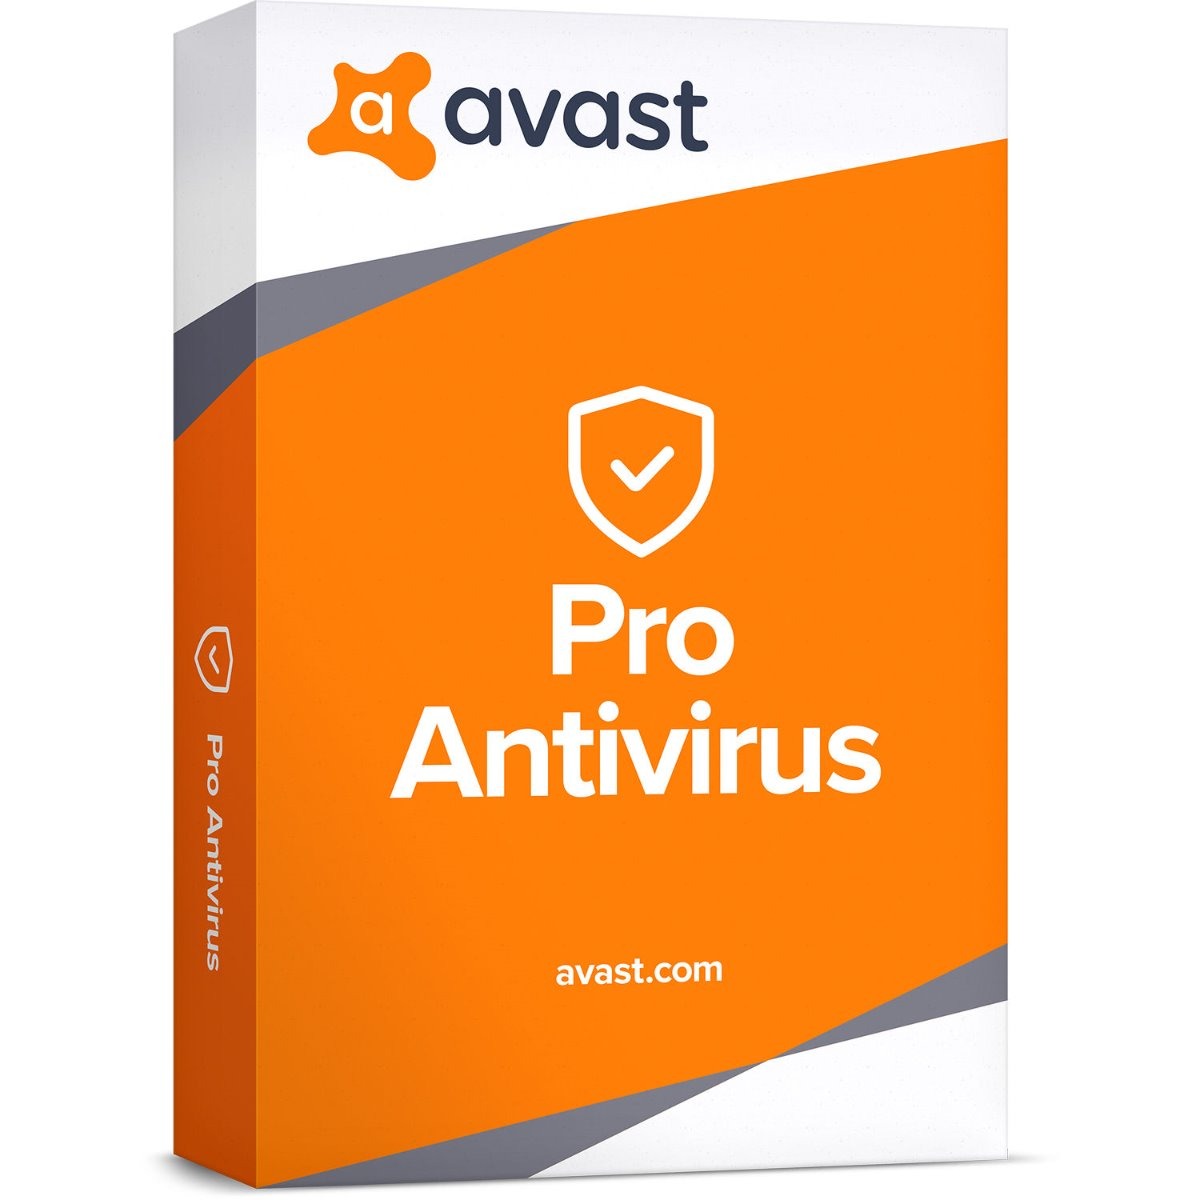 antivirus software free download full version avast